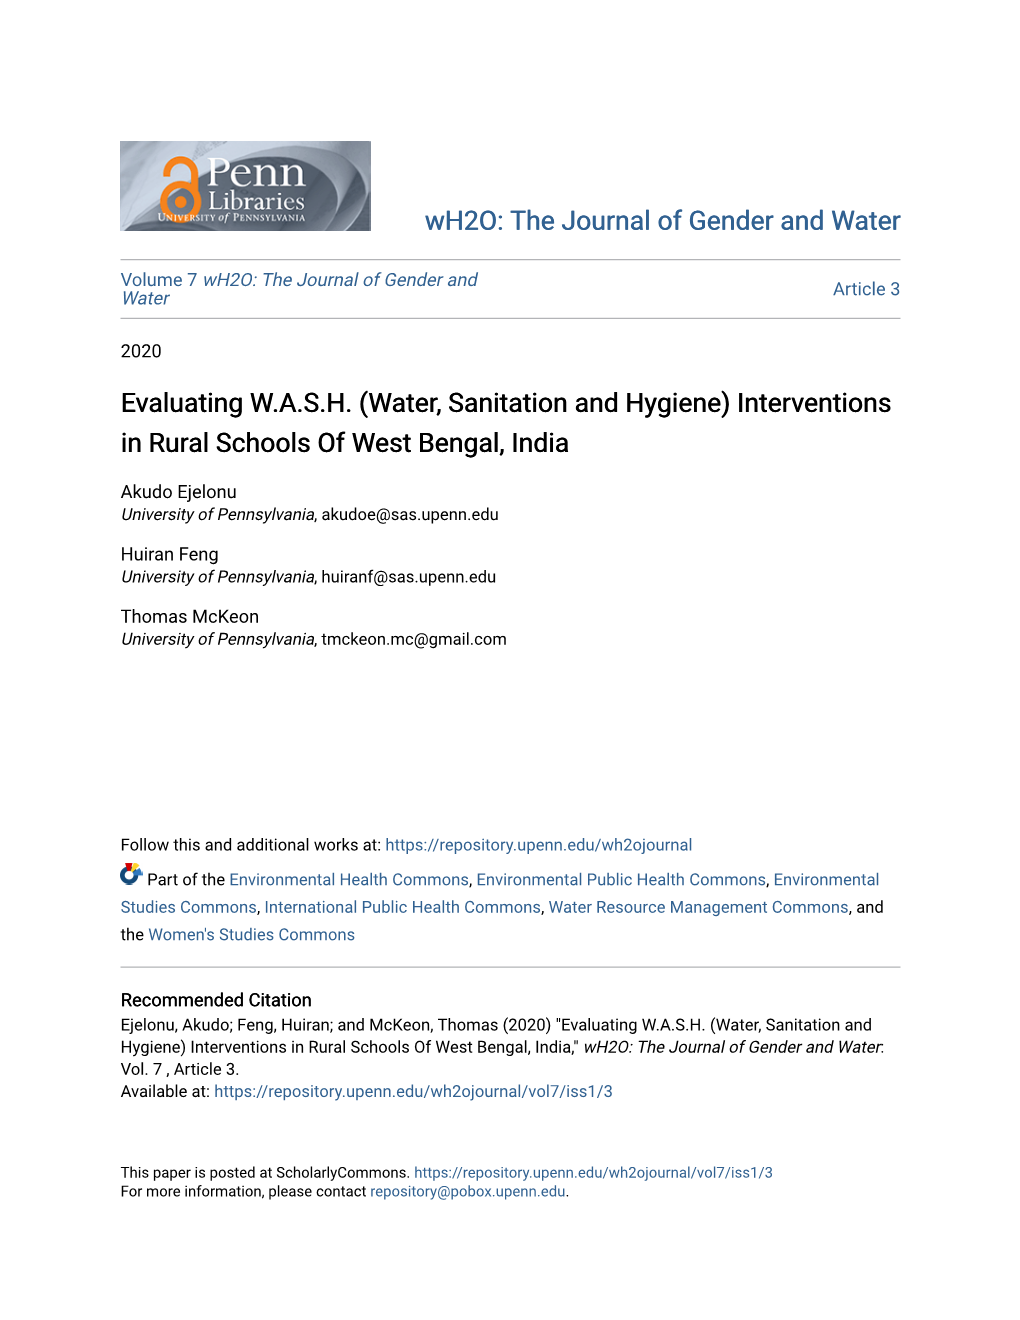 Evaluating WASH (Water, Sanitation and Hygiene)